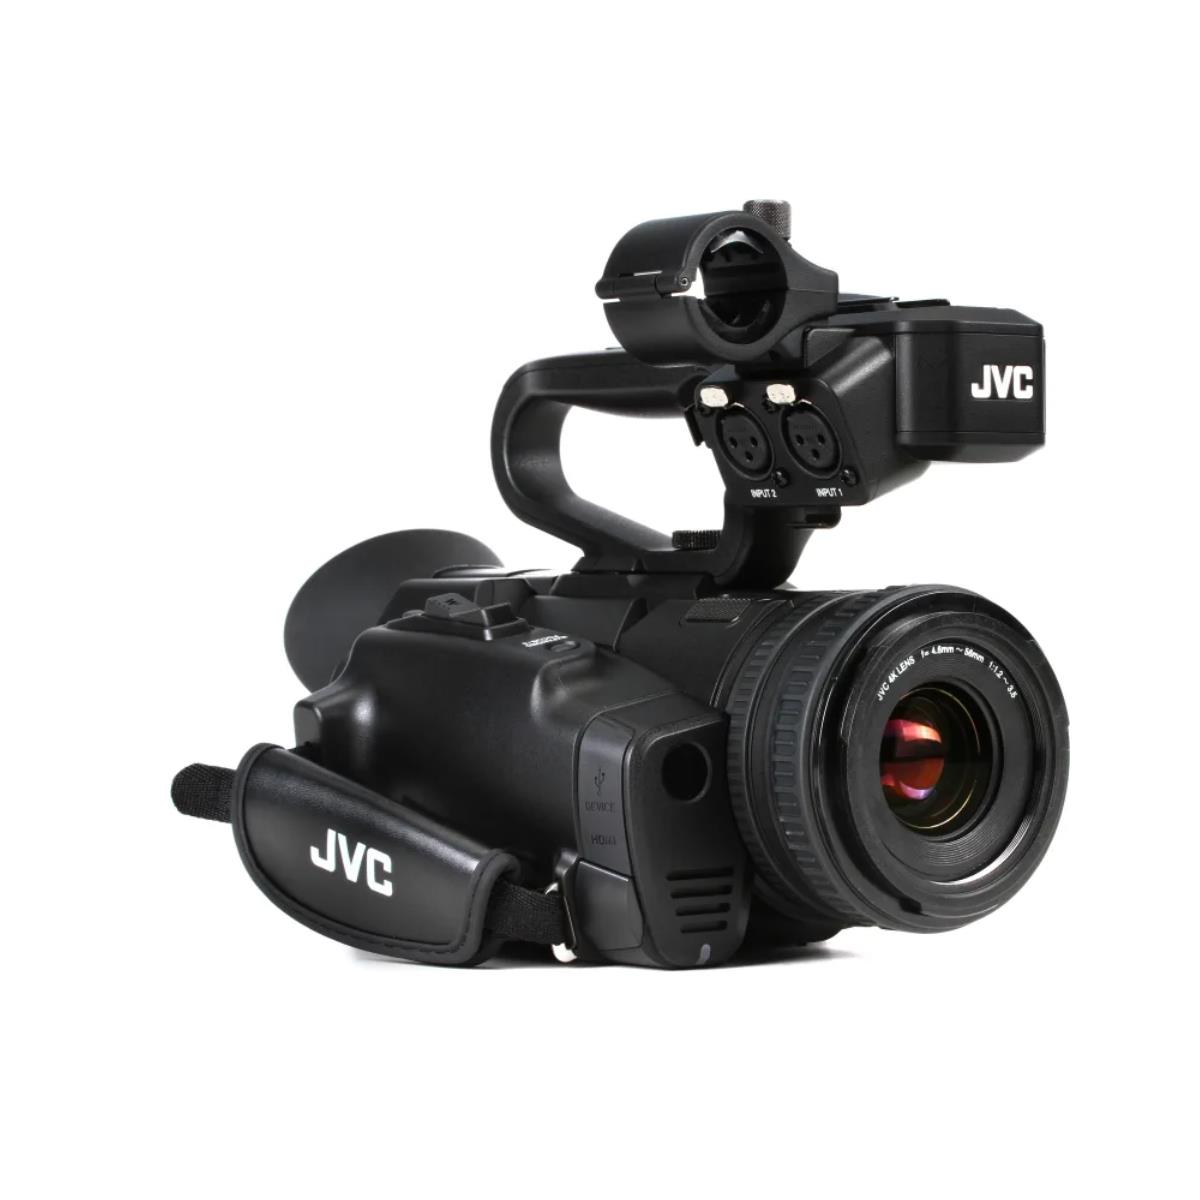 12.4MP 4K UHD Compact Handheld Camcorder w/Integrated 12x UHD Lens - JVC GY-HM170U